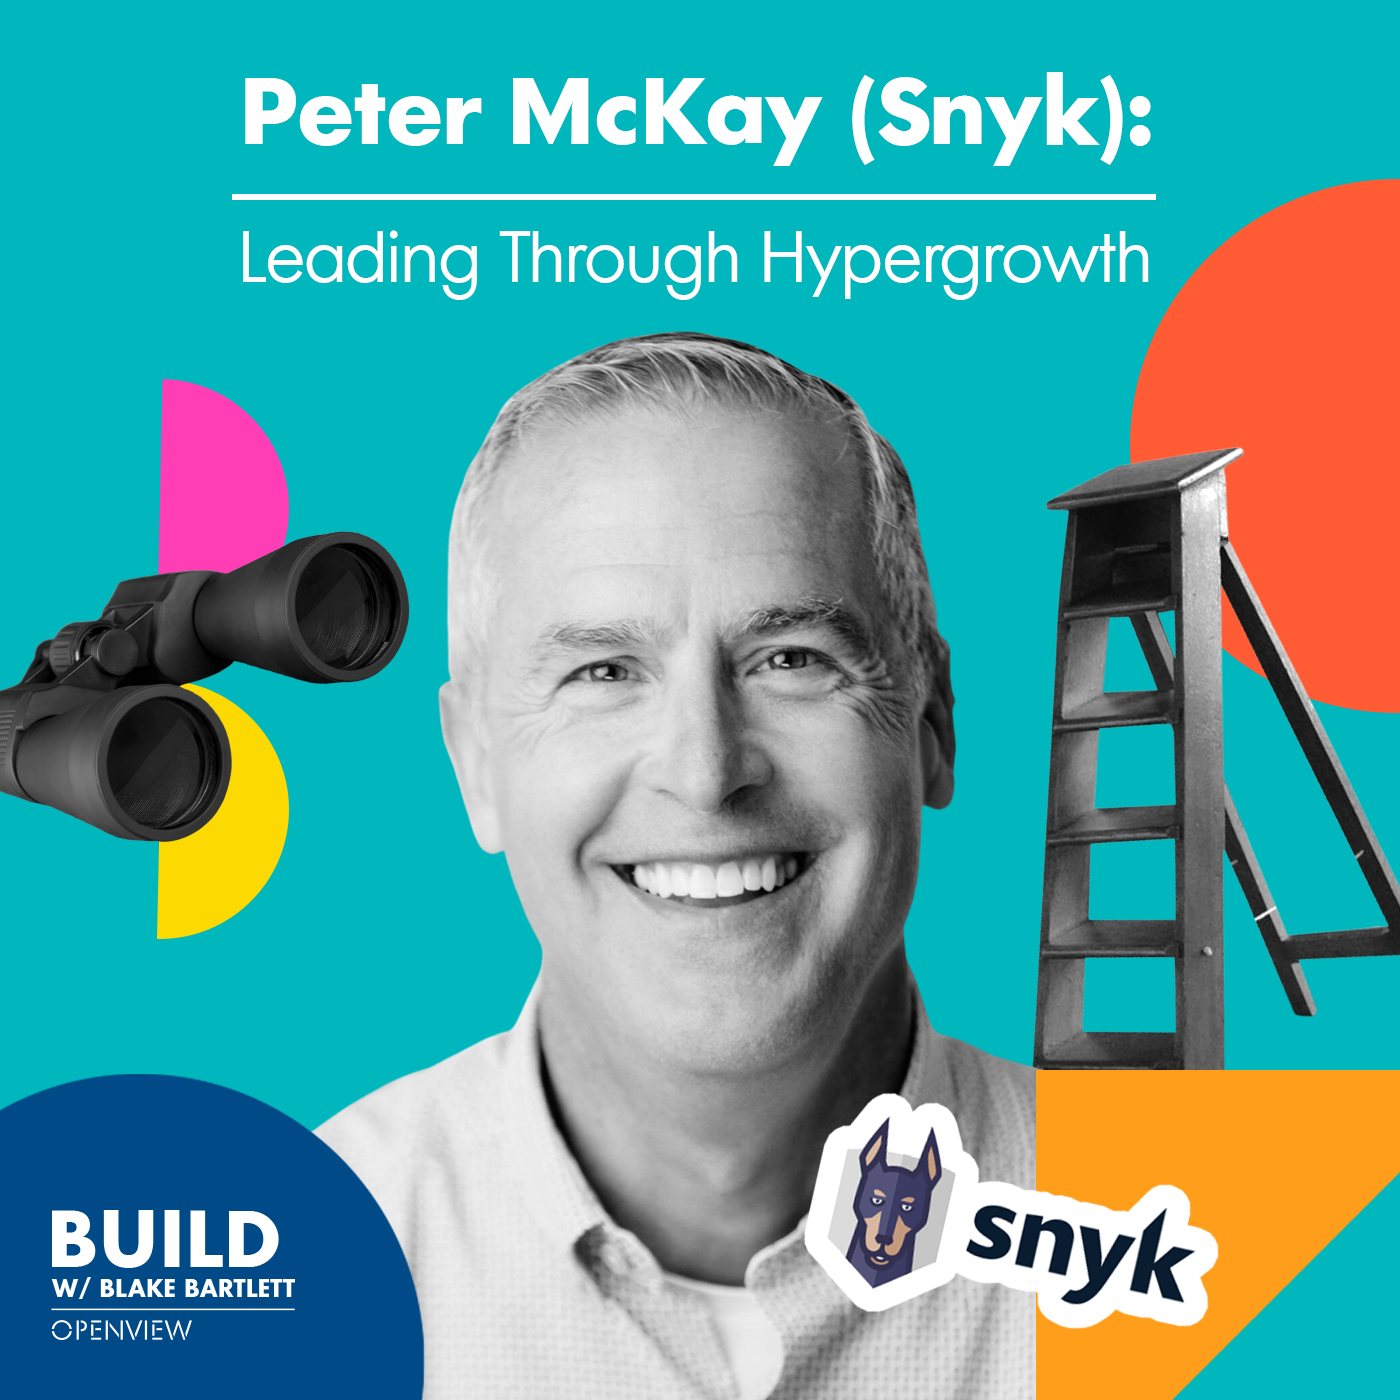 Peter McKay (Snyk): Leading Through Hypergrowth